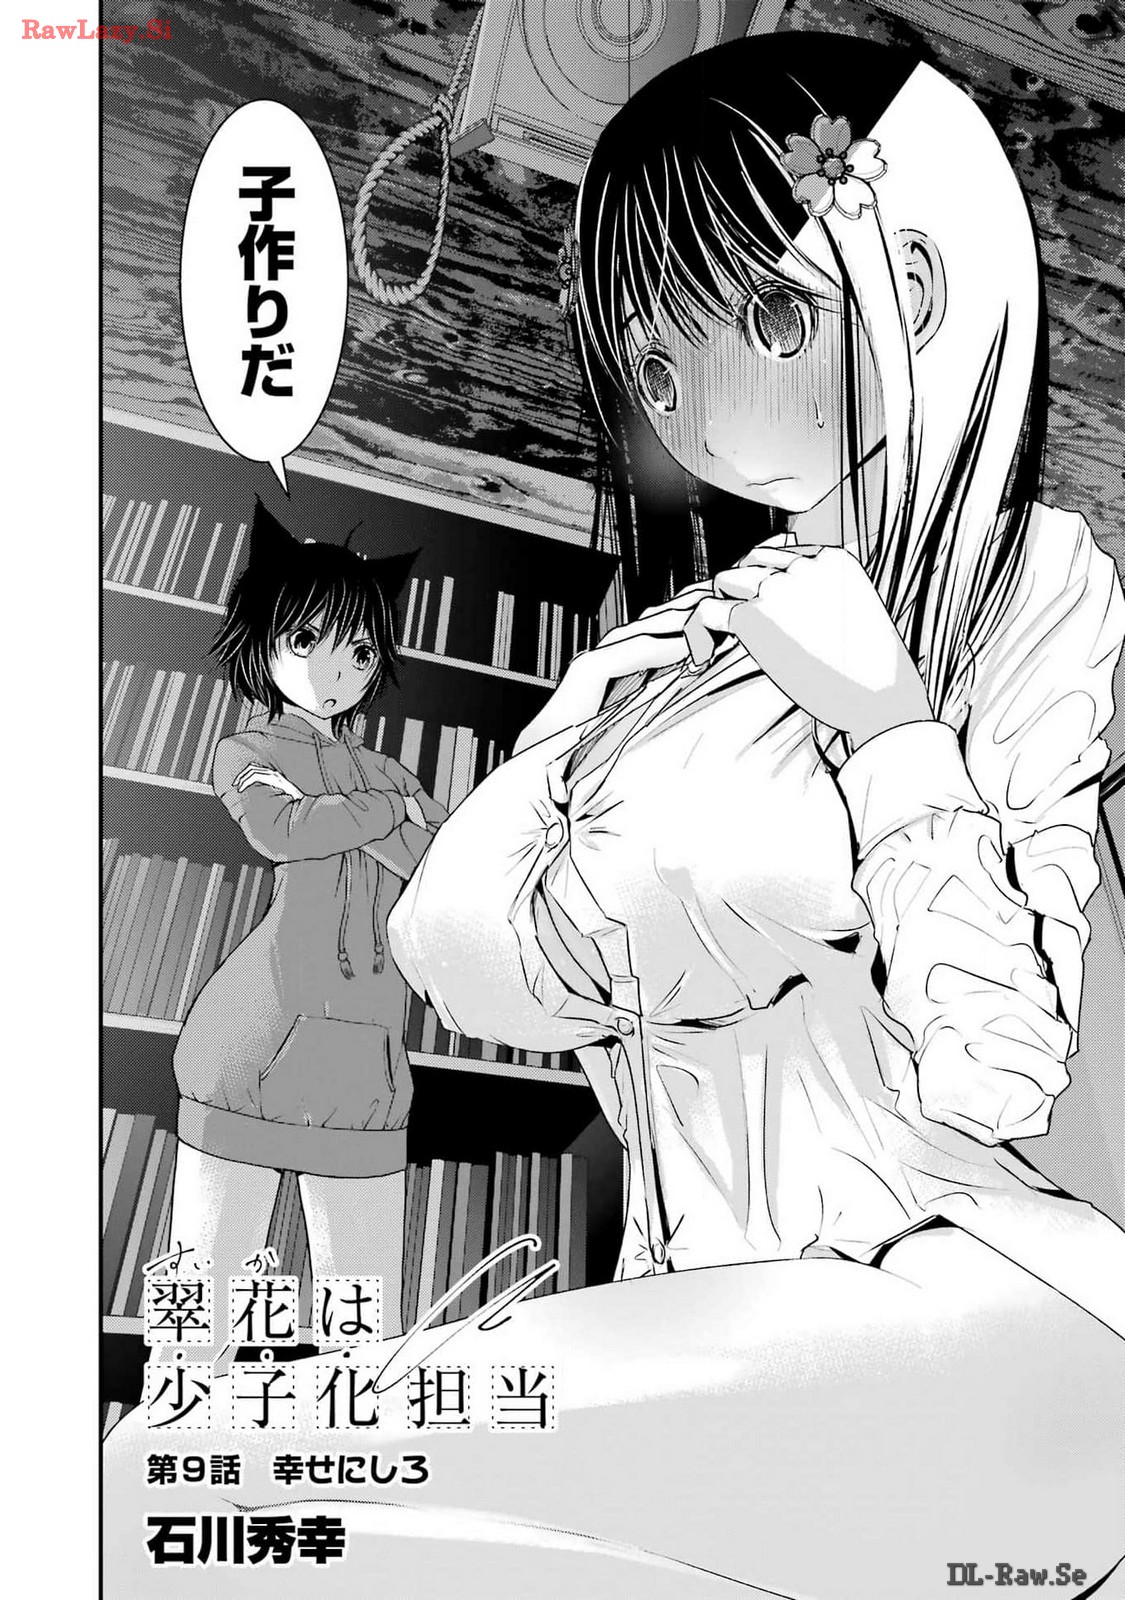 Suika wa Shoushika Tantou - Chapter 9 - Page 2